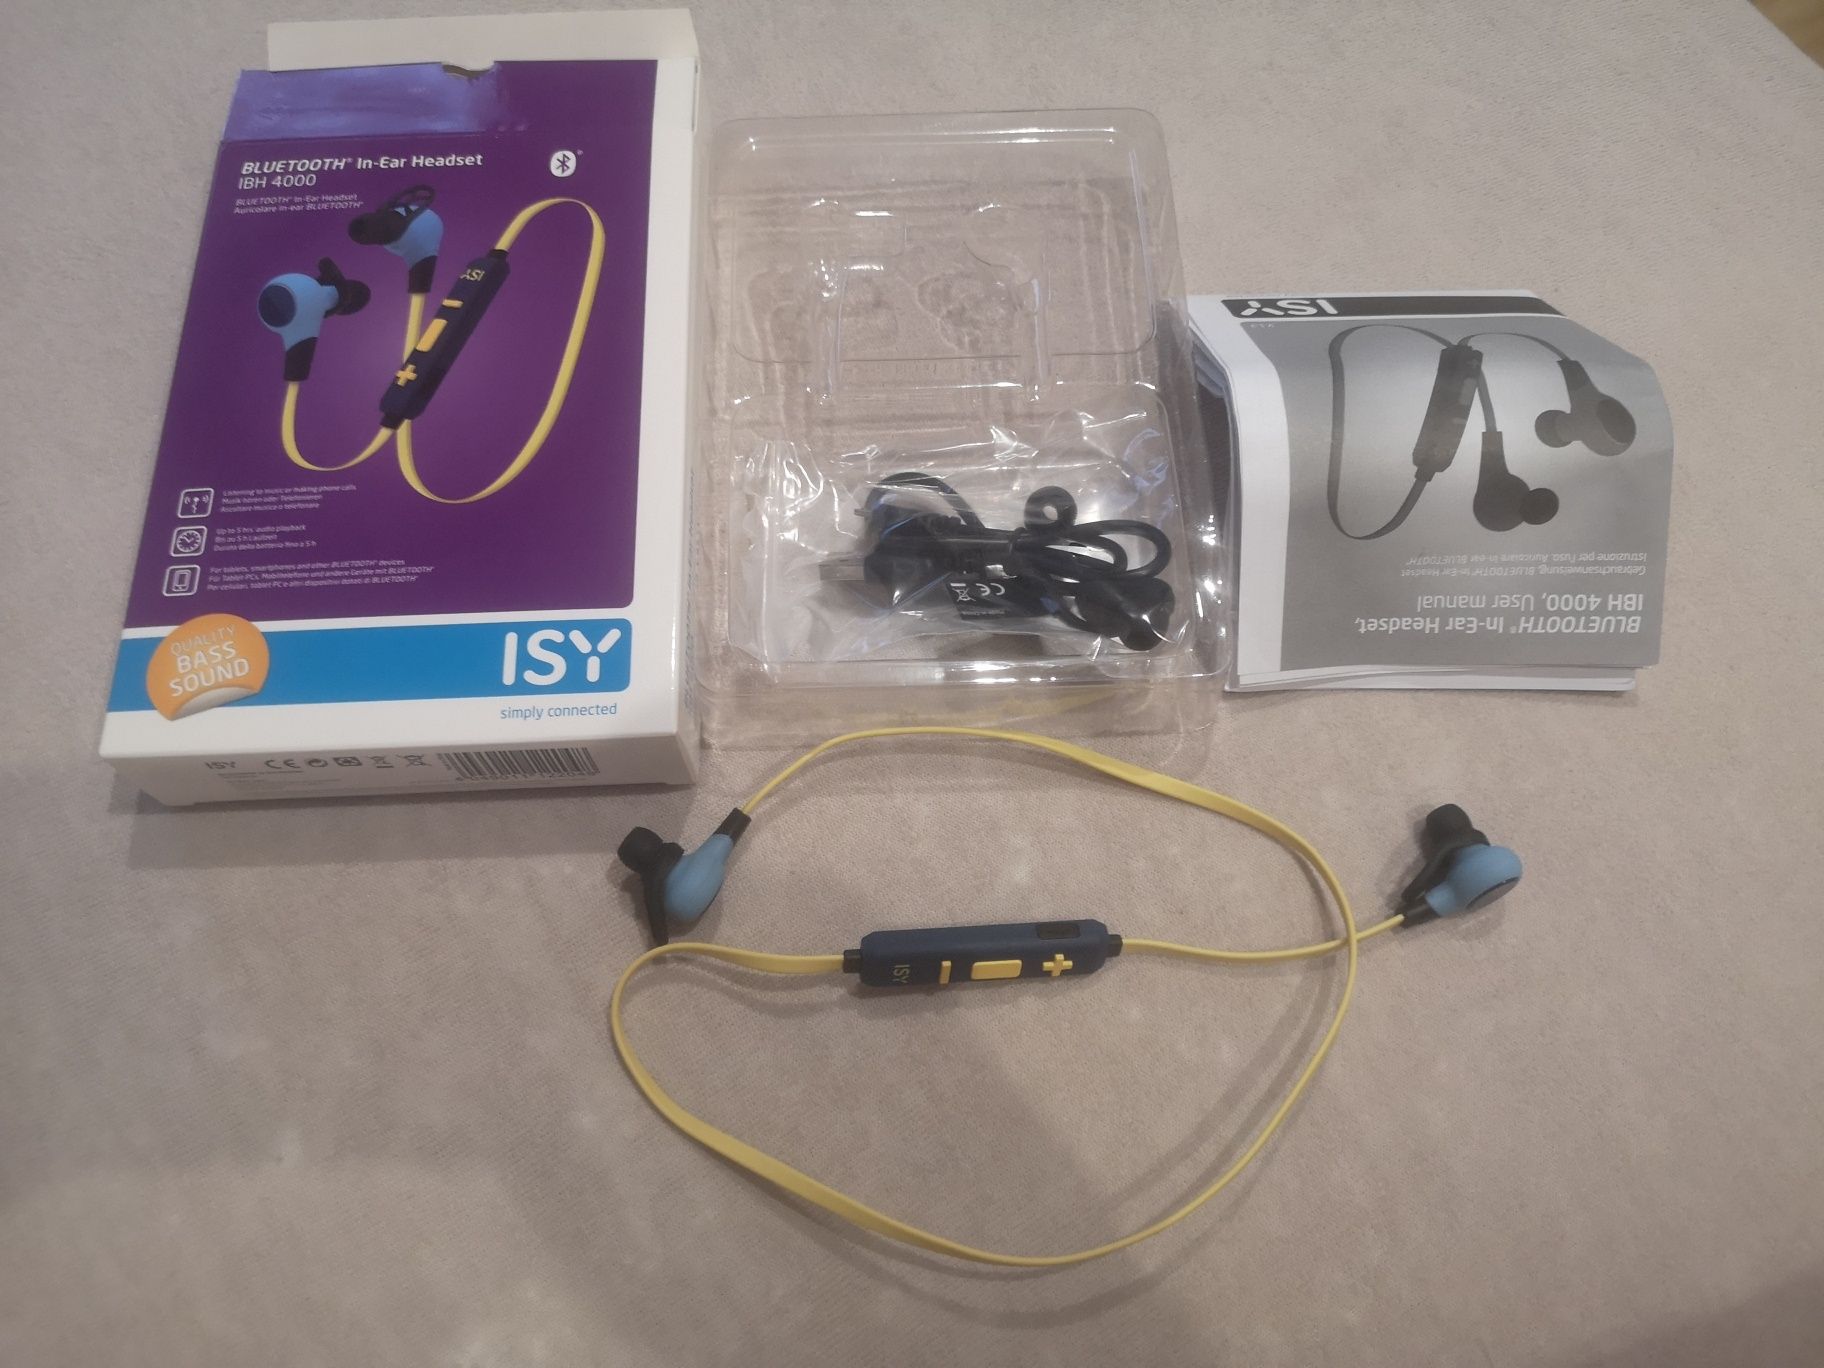 ISY bluetooth in-ear headset IBH 4000 słuchawki bezprzewodowe BT